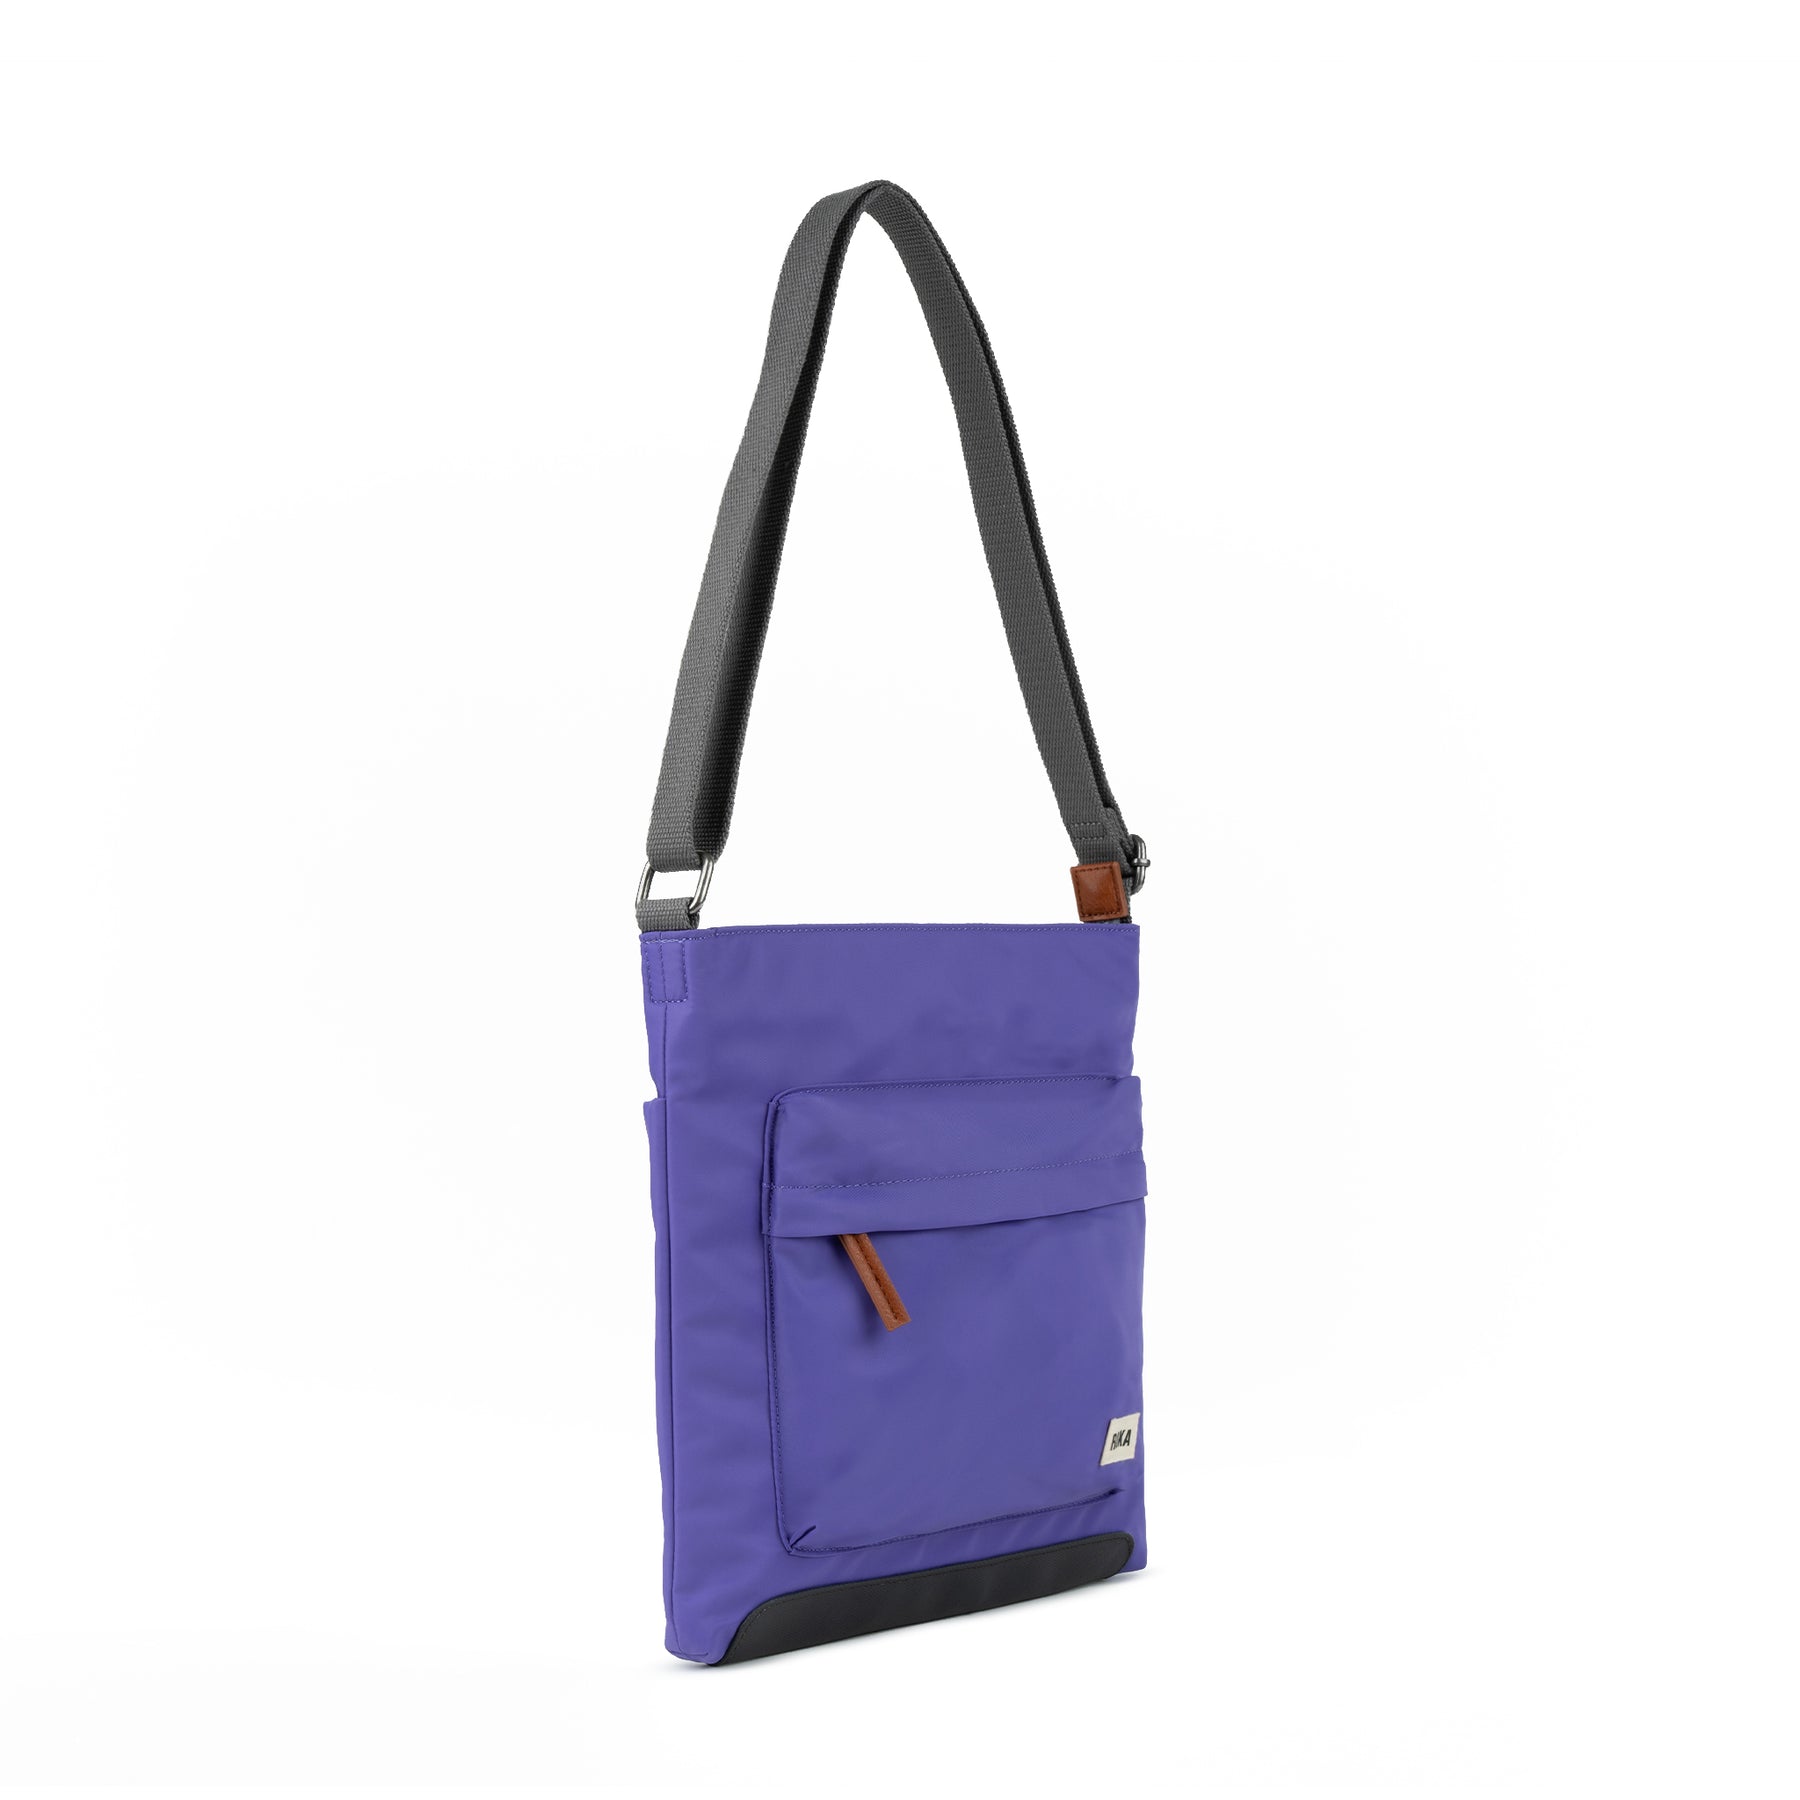 ROKA Kennington B Peri Purple Medium Recycled Nylon Bag - OS